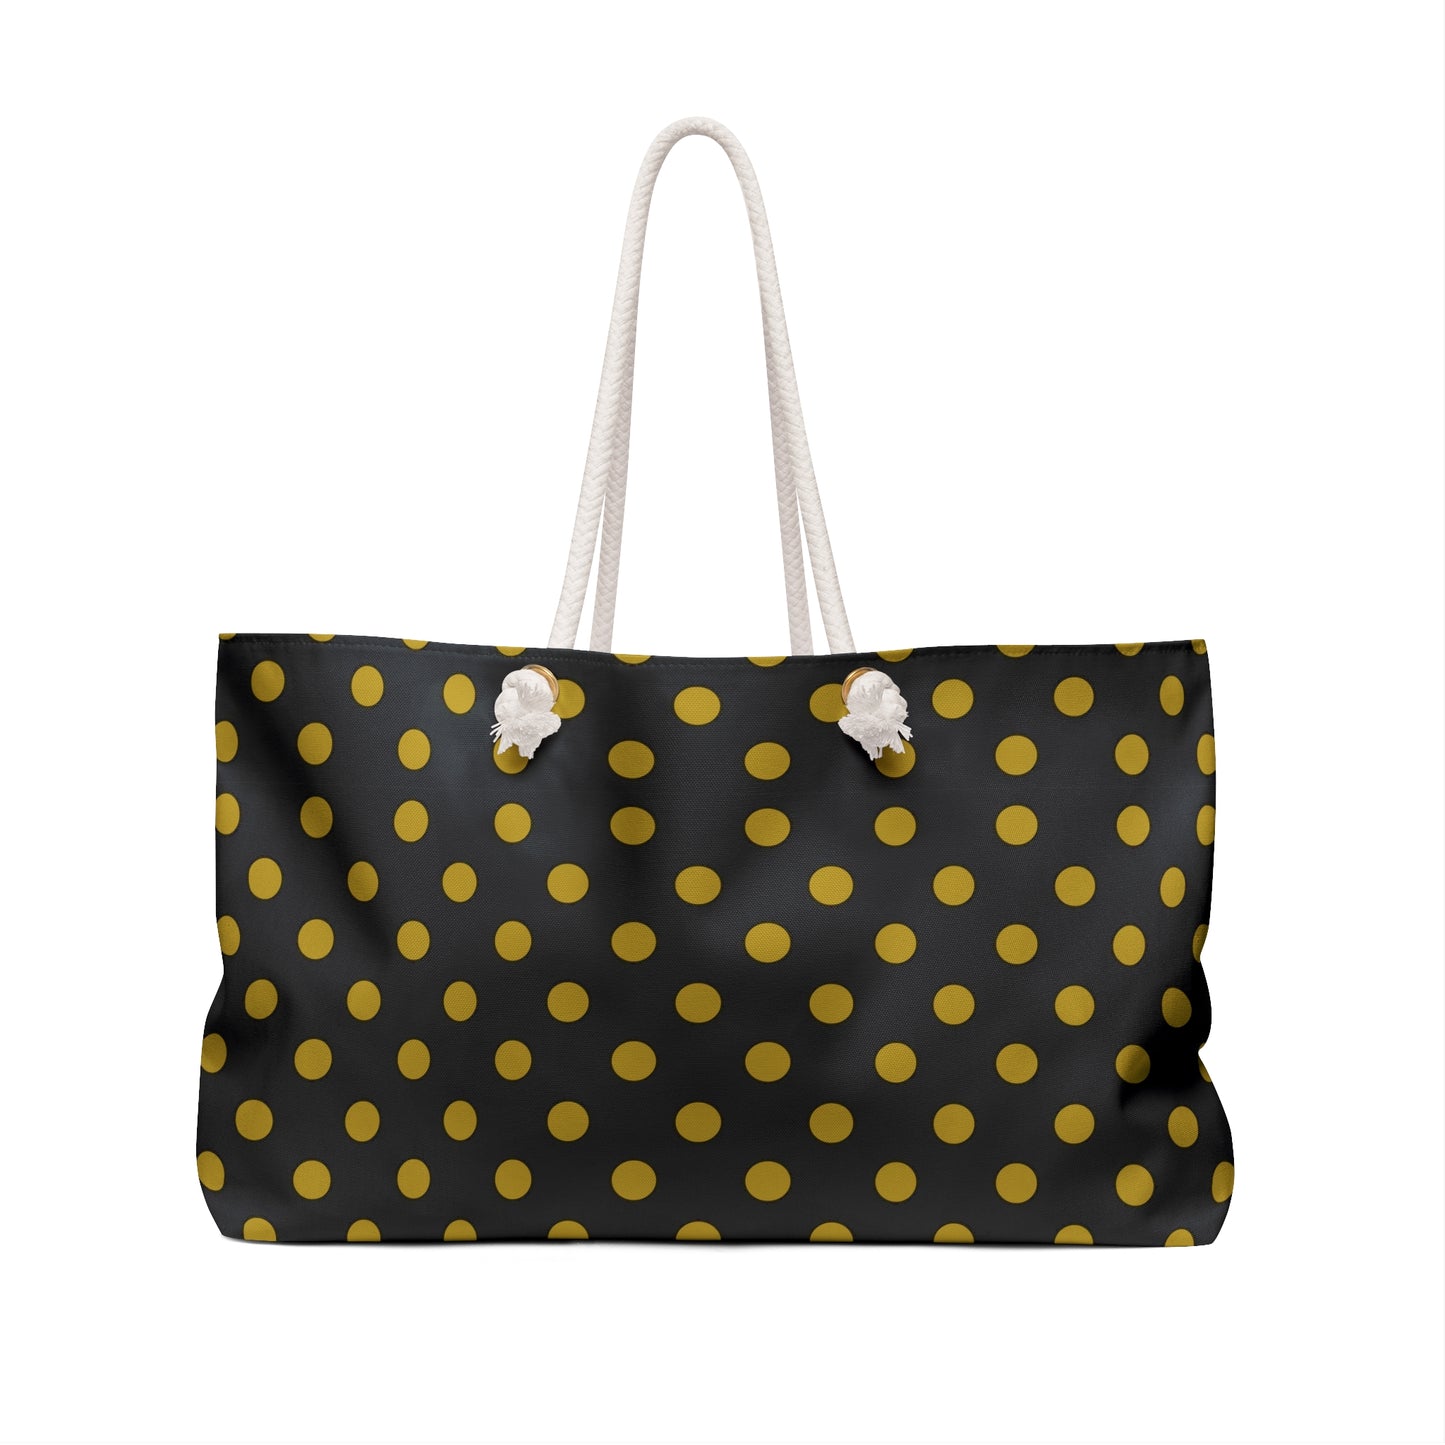 Black and Gold Polka Dot Weekender Bag